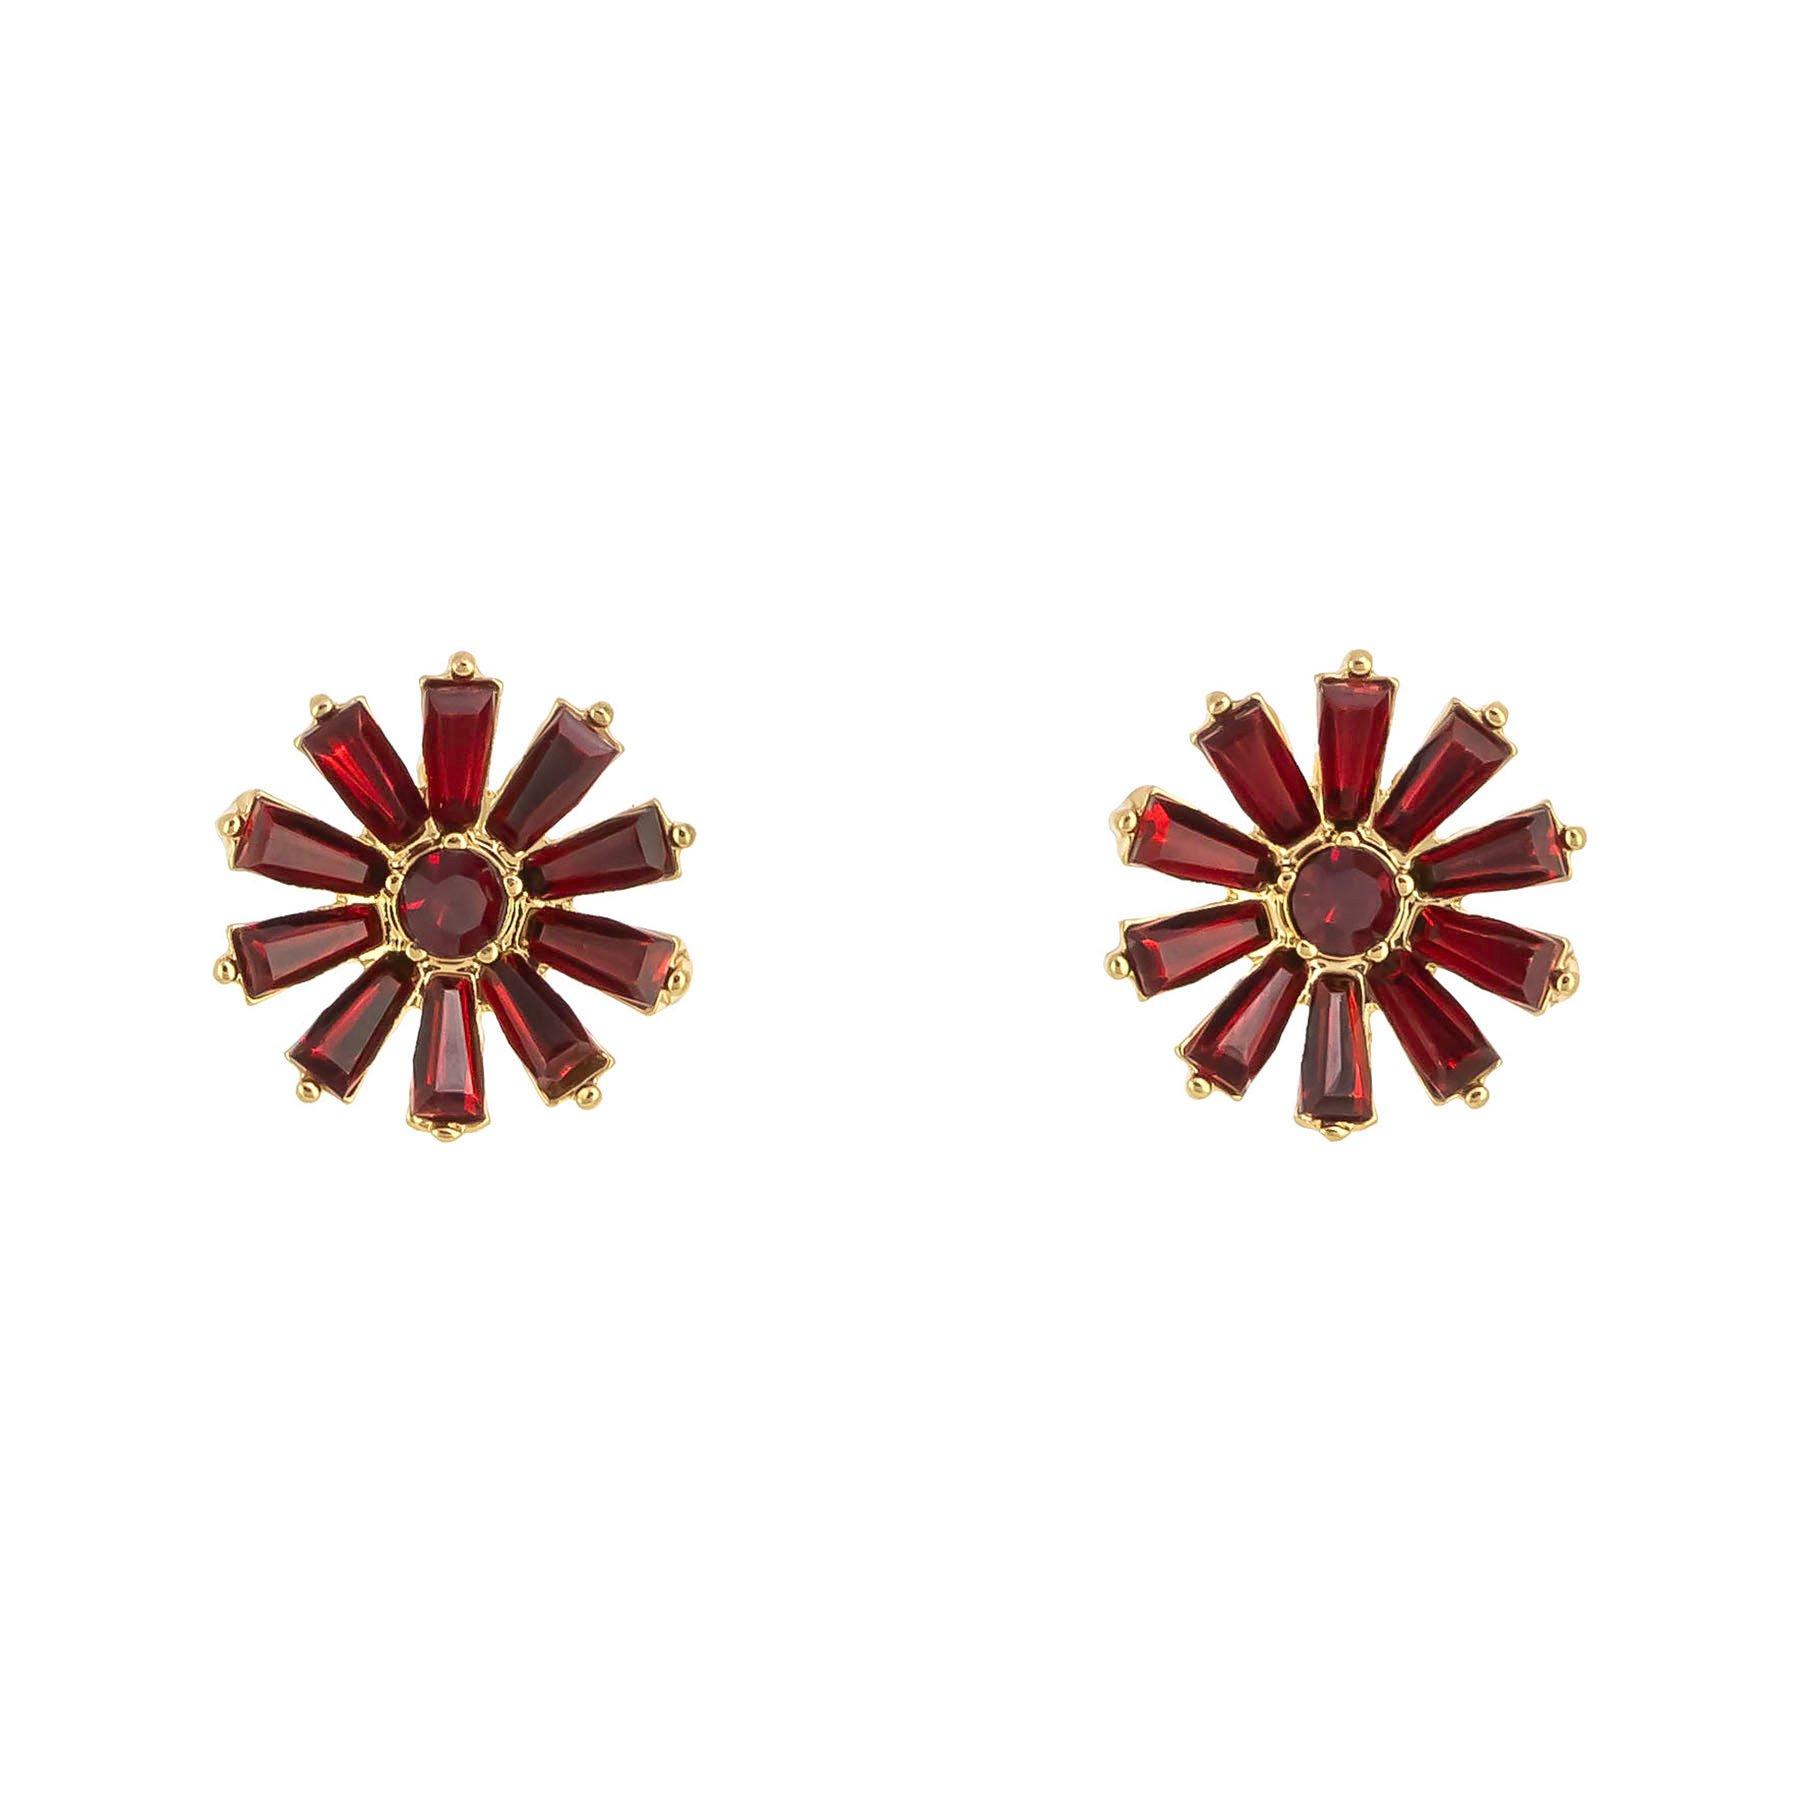 1 In. Rhinestone Flower Stud Earrings